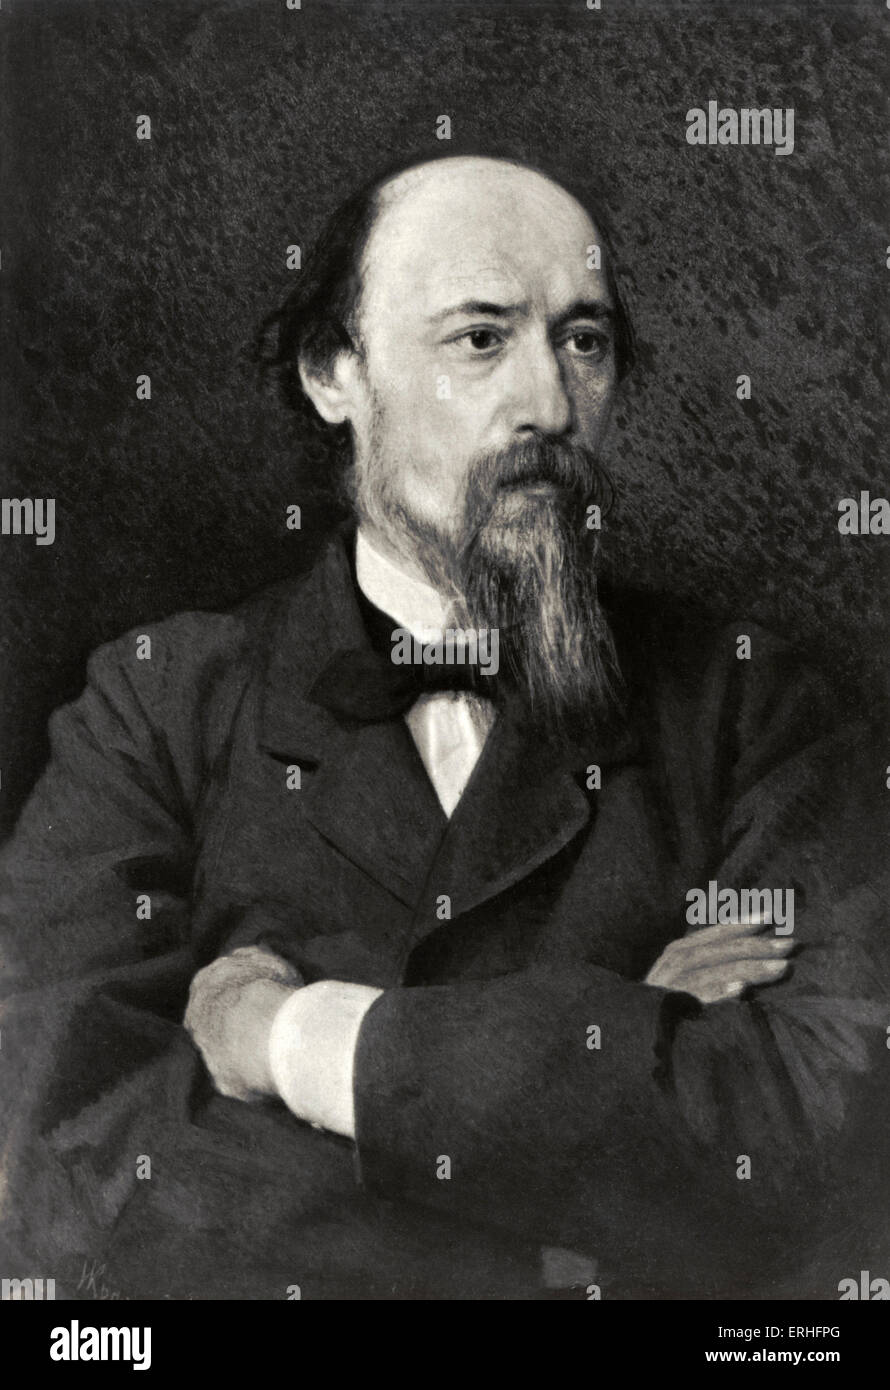 Nikolai Alekseyevich Nekrasov - Ritratto del poeta russo. 28 Novembre 1821 - 8 gennaio 1878. Foto Stock